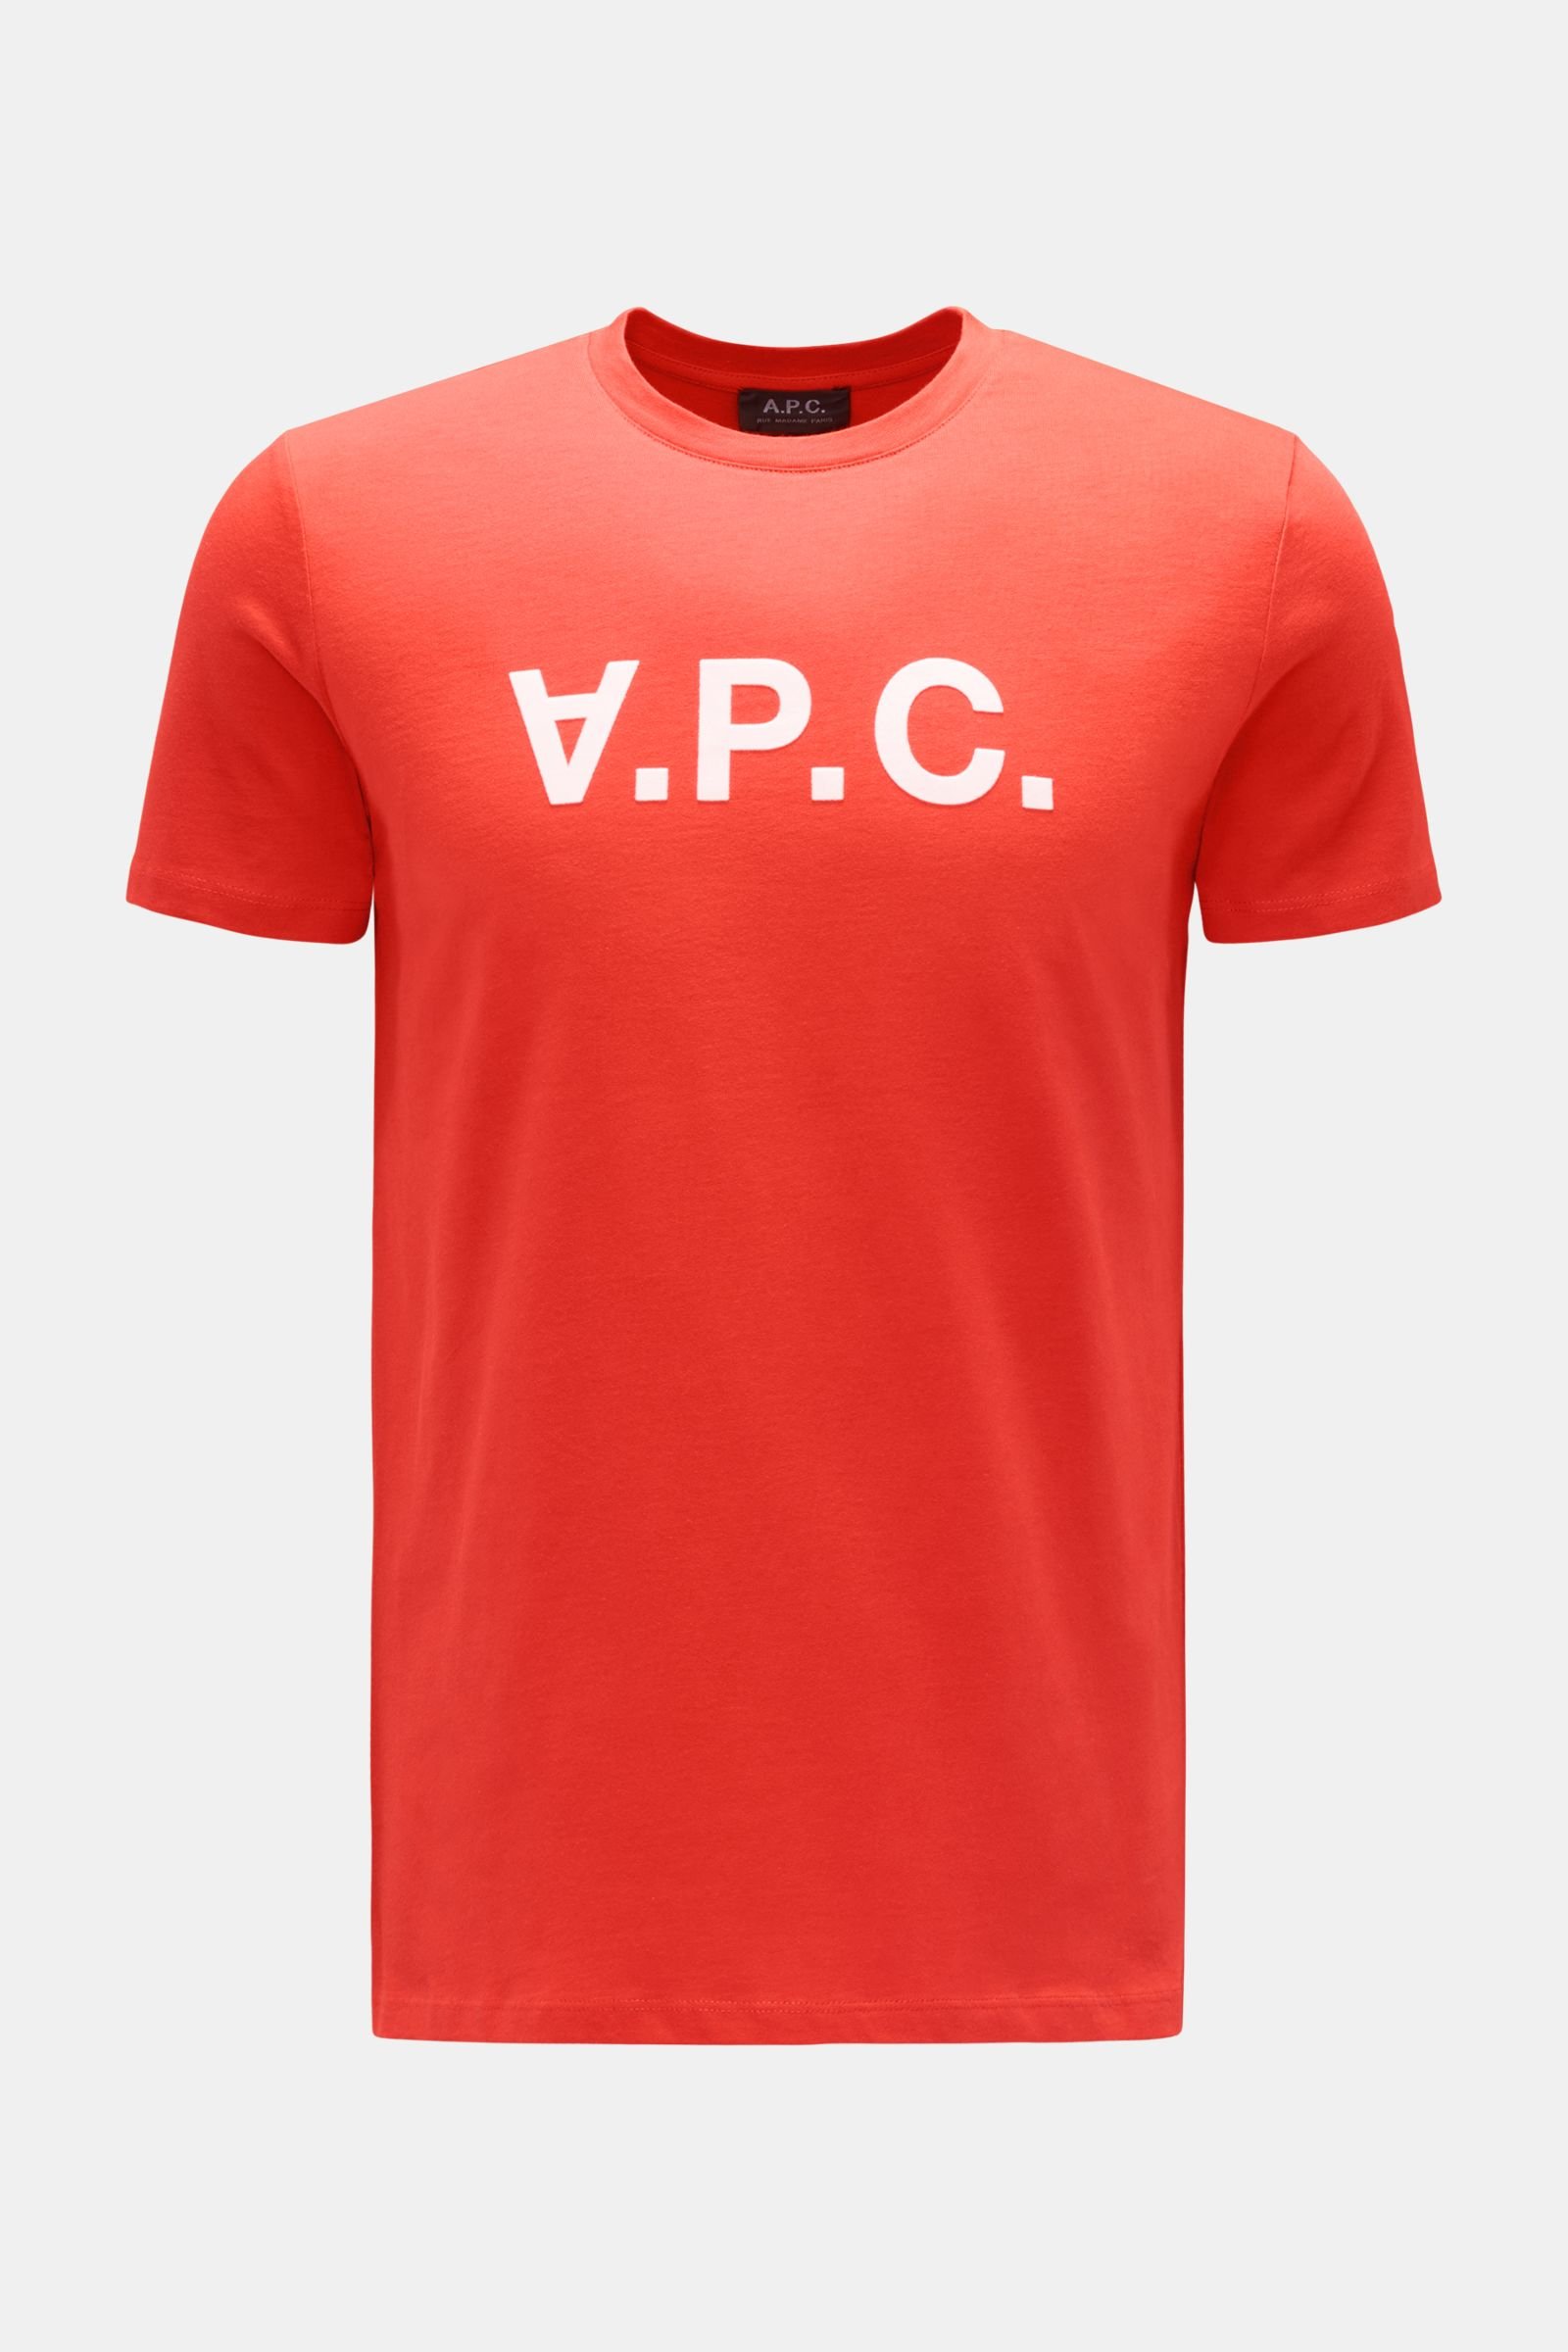 Crew neck T-shirt 'VPC' red